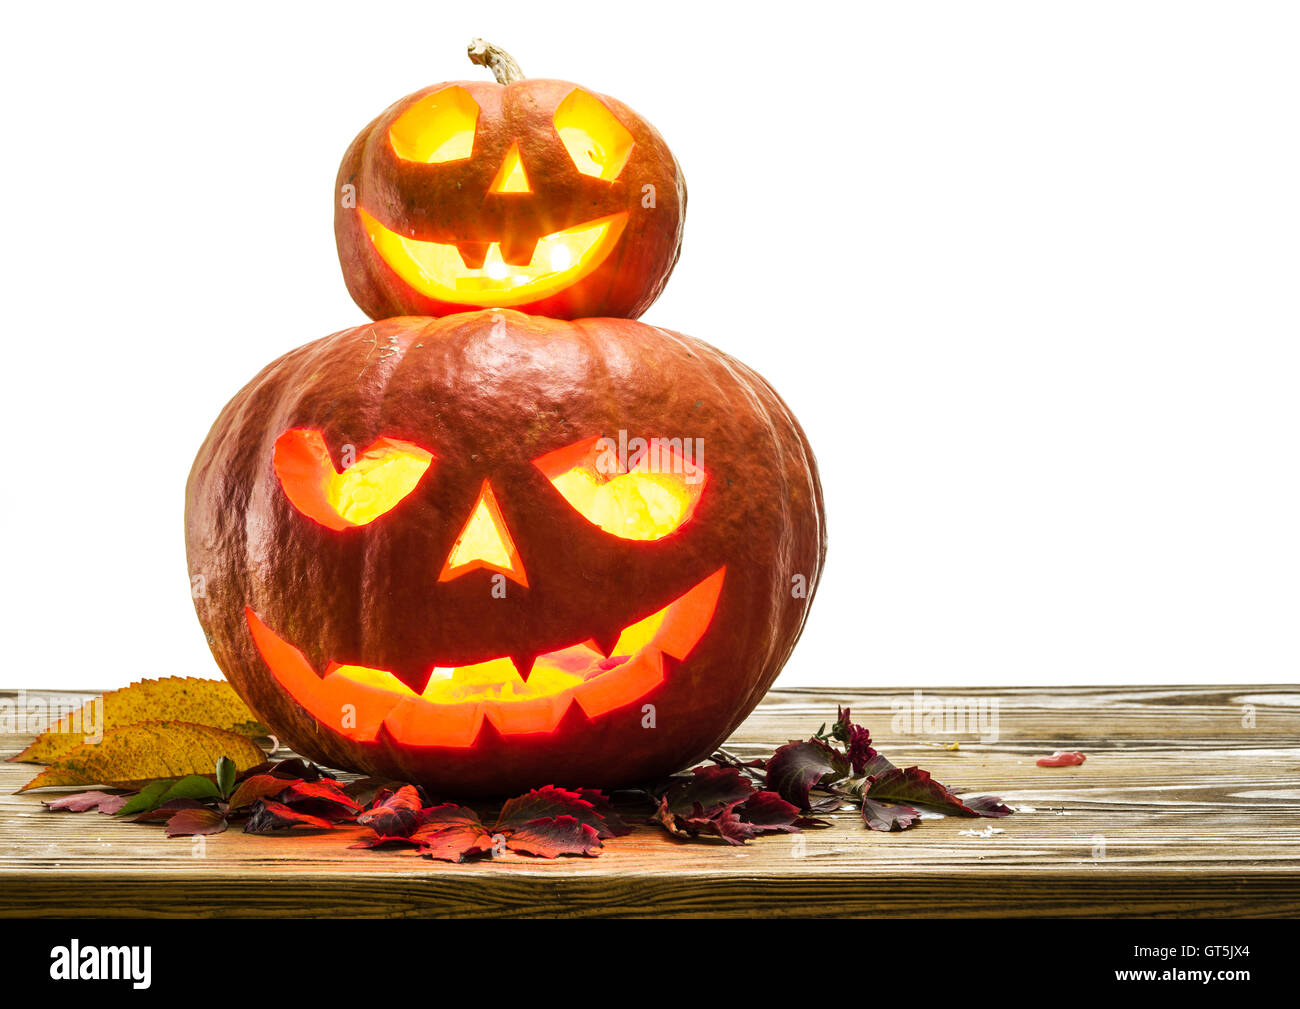 Grinning pumpkin lantern or jack-o'-lantern is one of the symbols of Halloween. Halloween attribute. Stock Photo